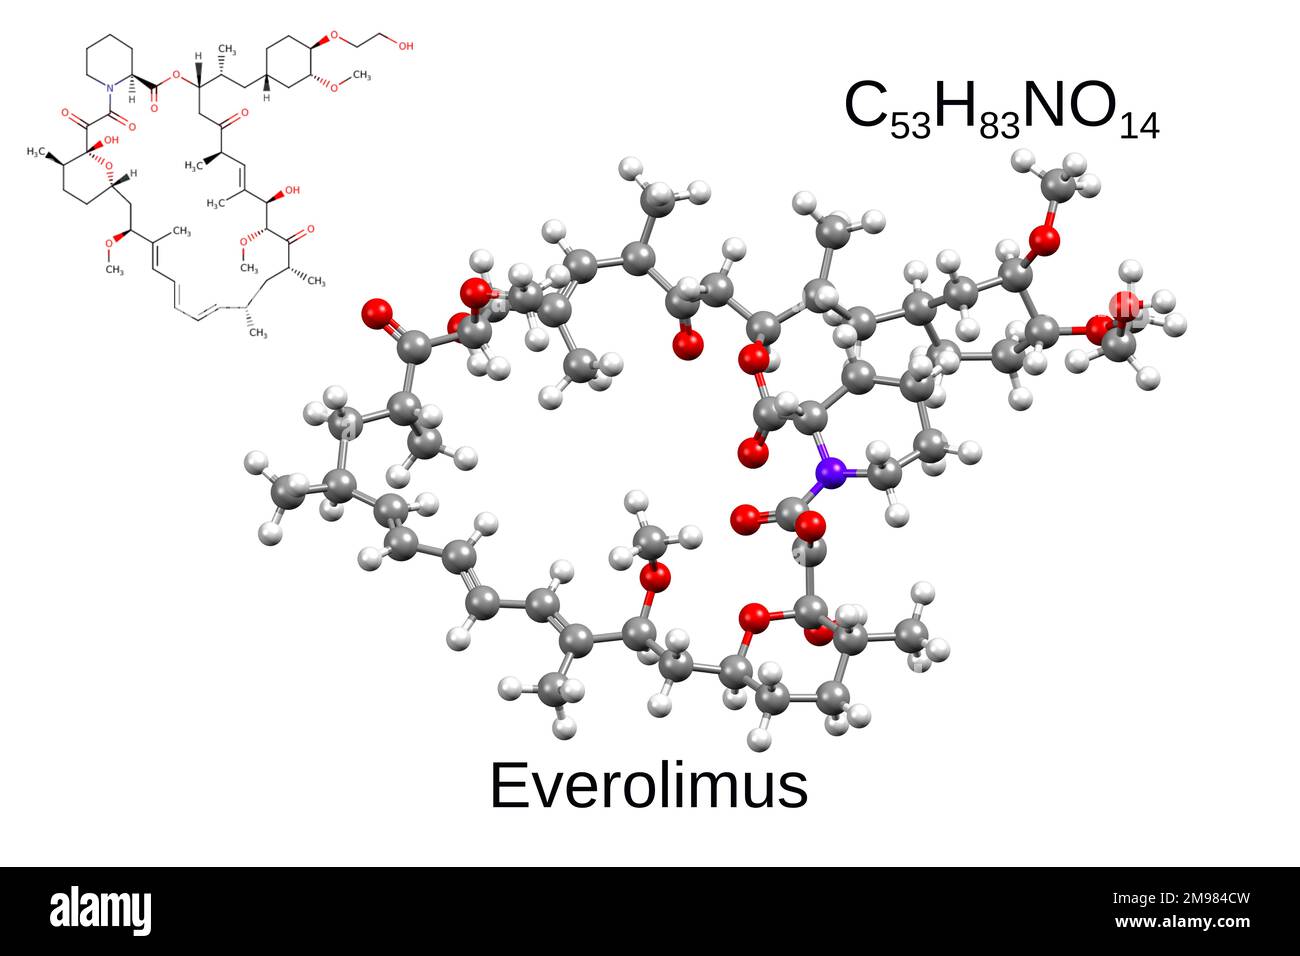 Chemical formula, skeletal formula and 3D ball-and-stick model of a immunosuppressant drug everolimus, white background Stock Photo